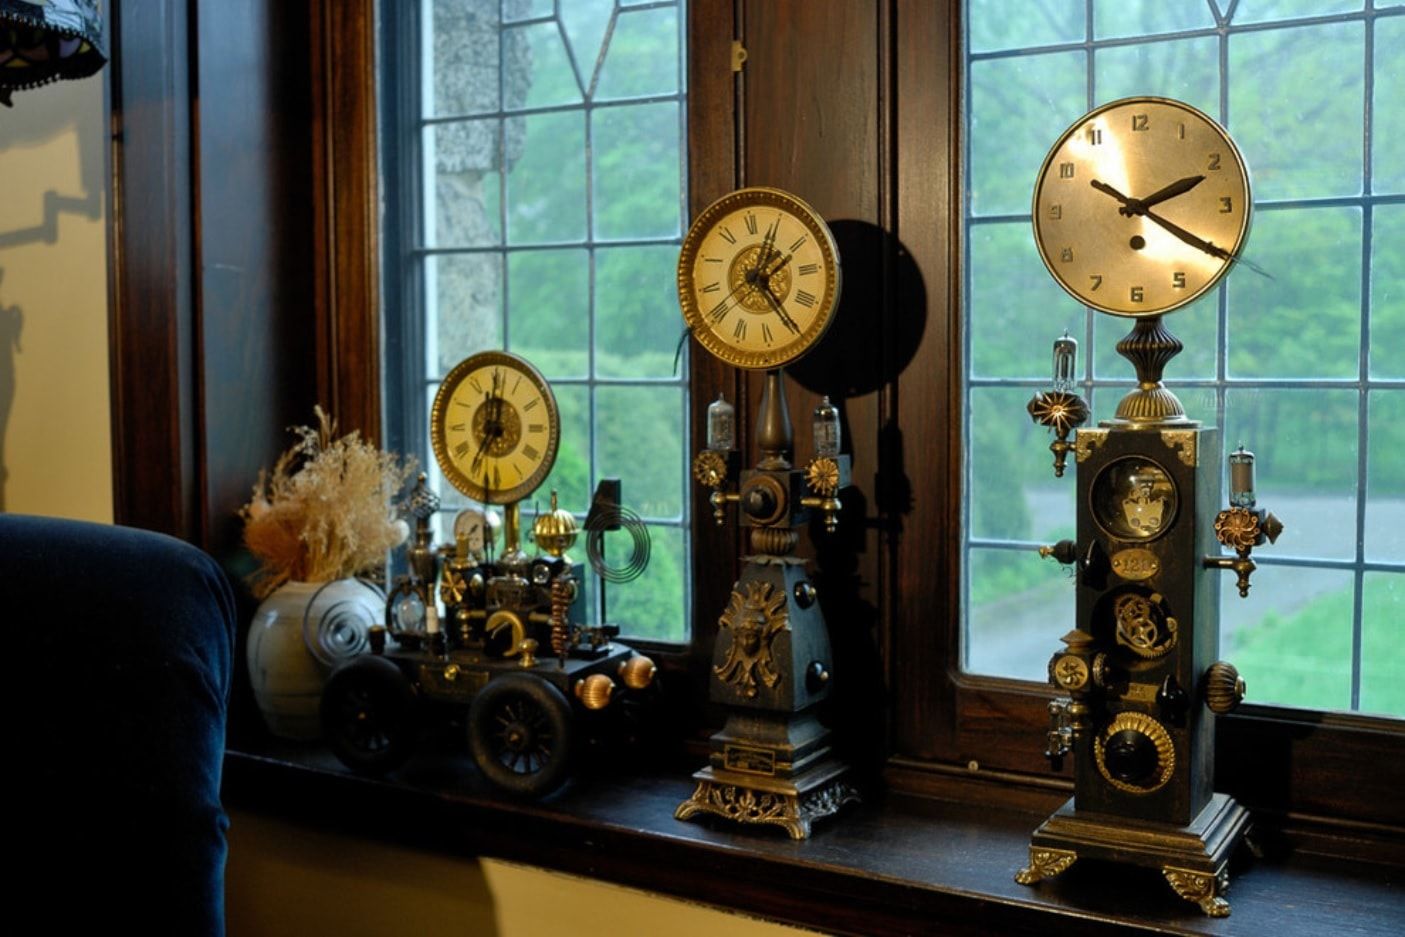 Modern Steampunk House Interior Photo Examples. Rare clocks of the latticed window sill